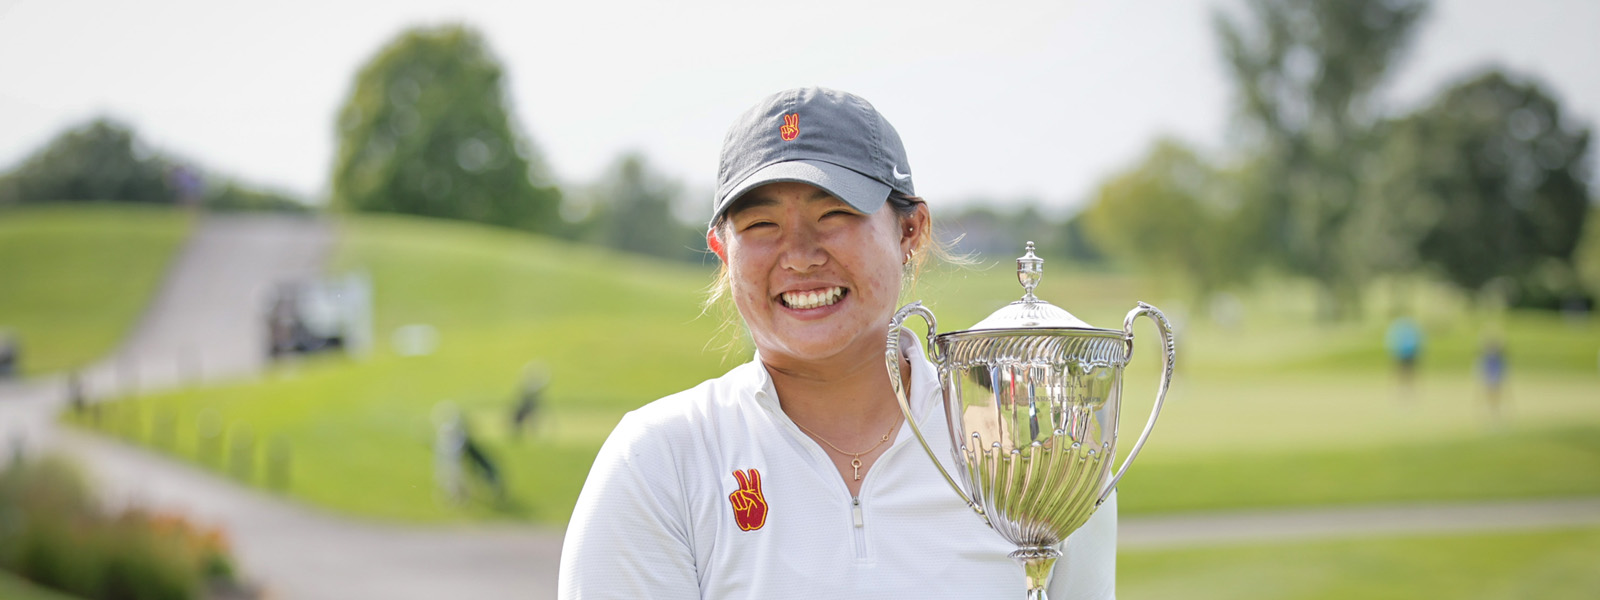 Catherine Park earns medalist honors